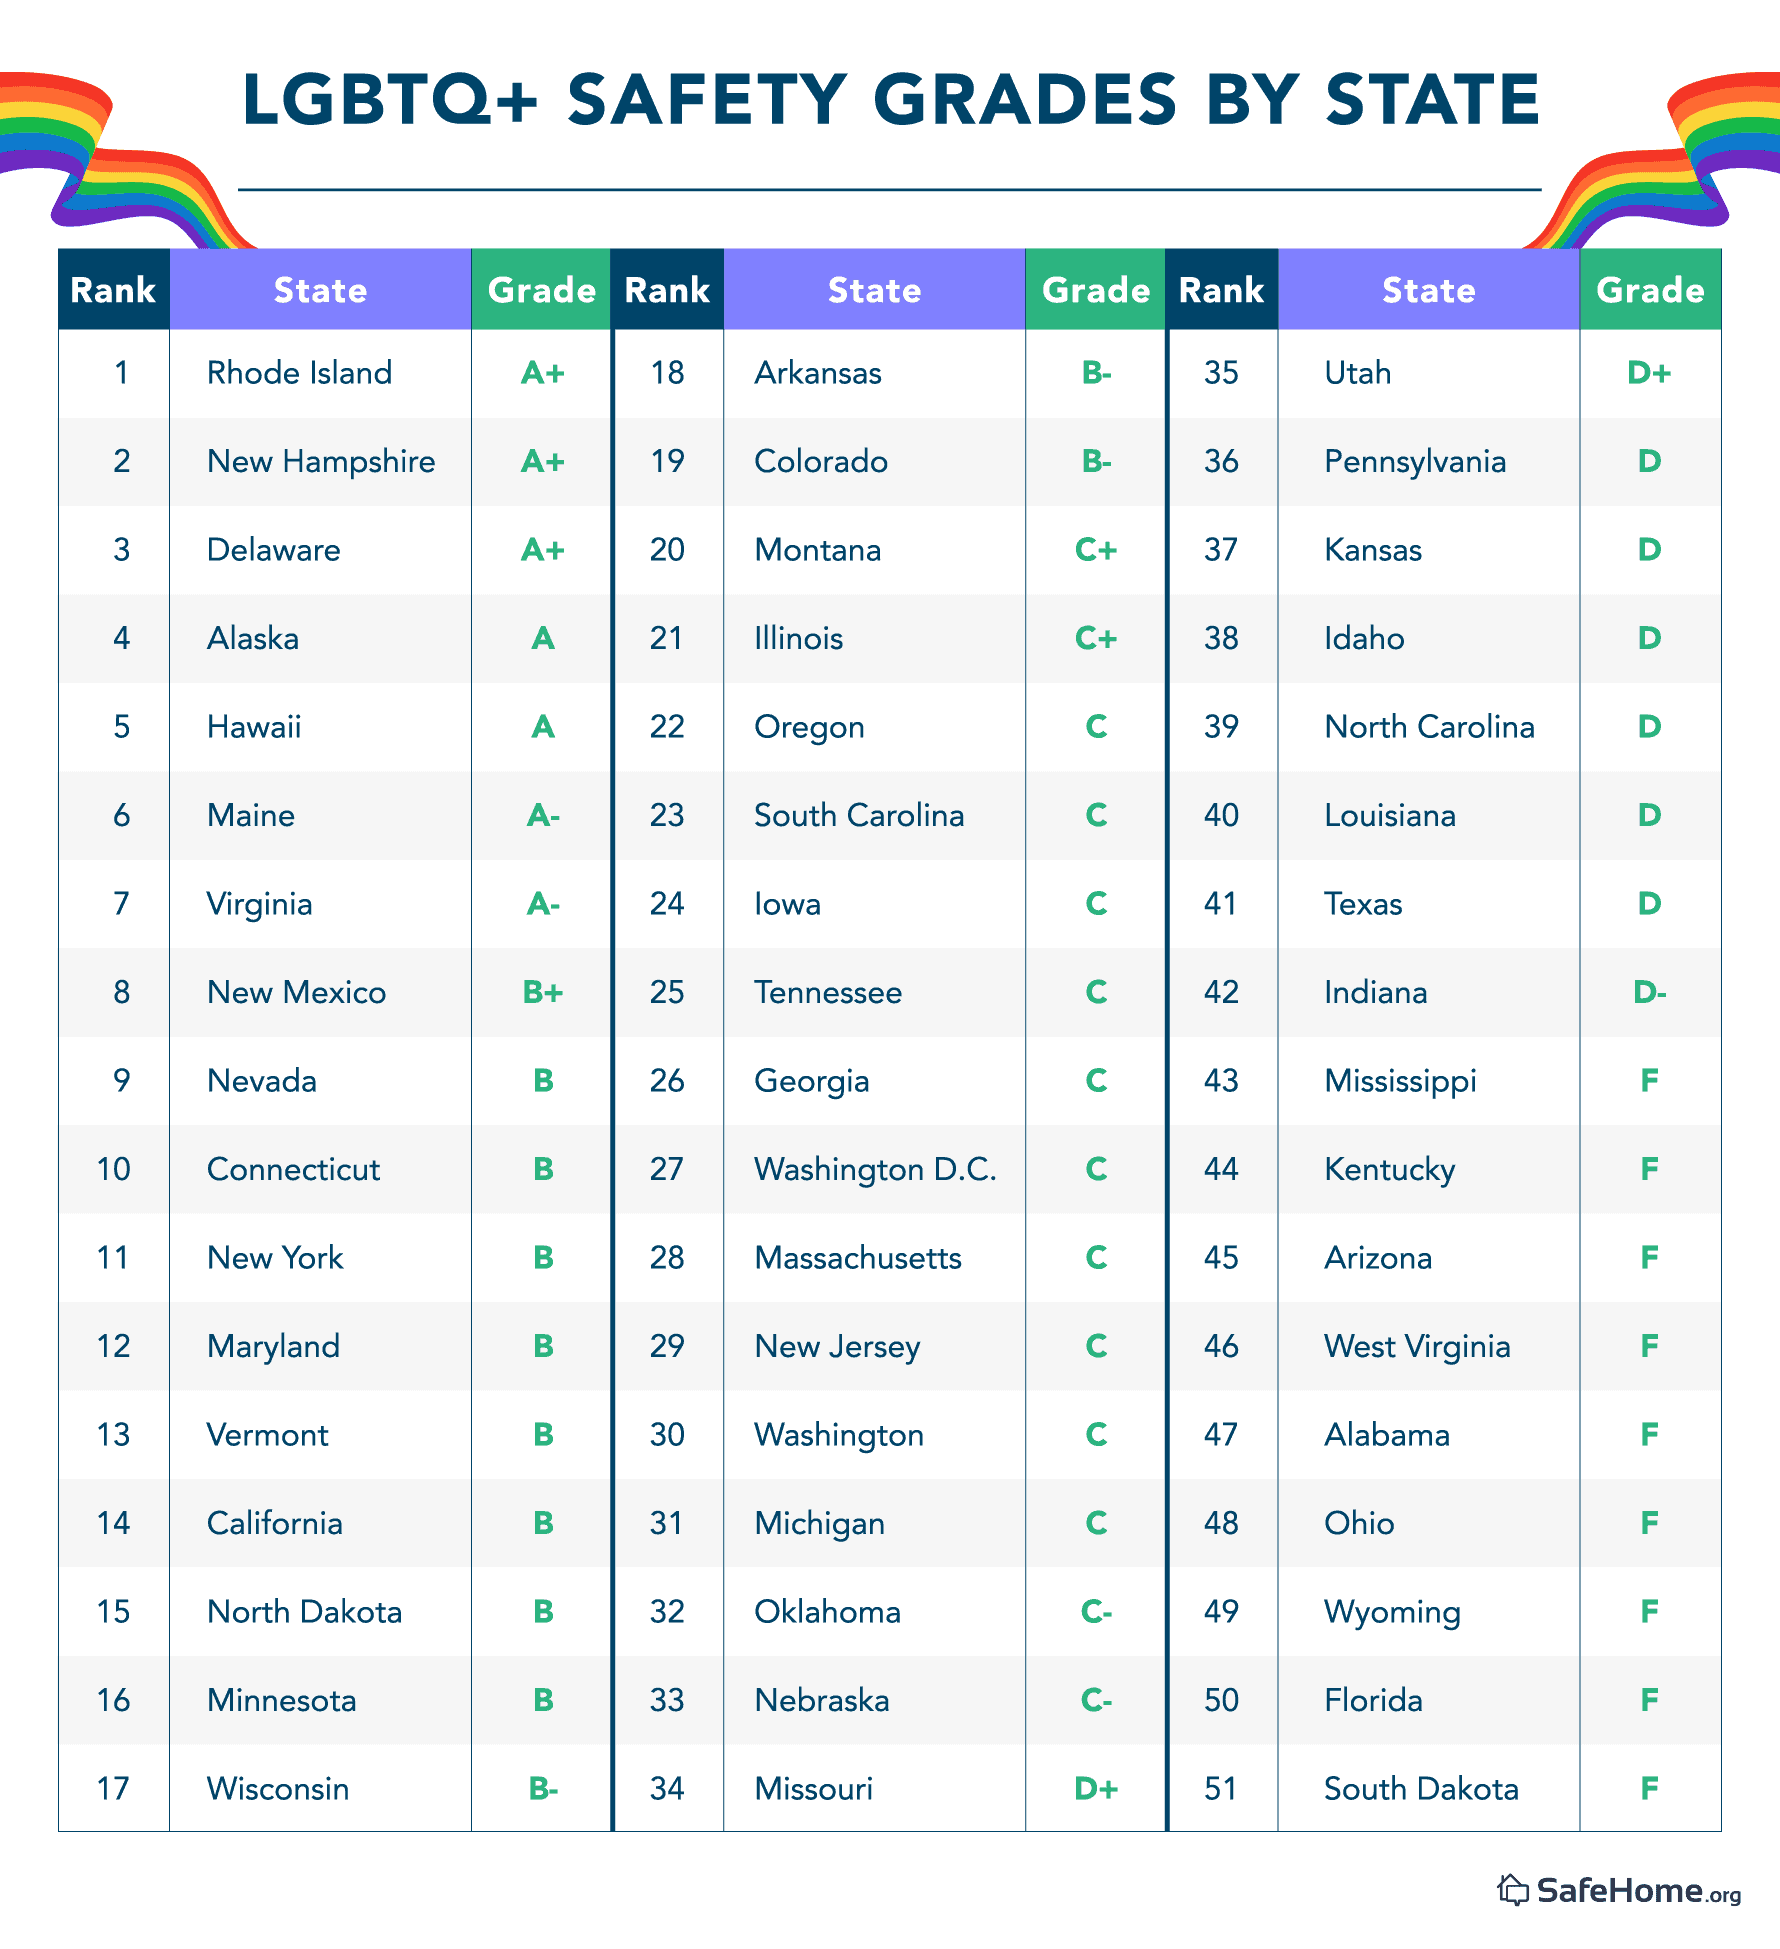 LGBTQ Safety Grades by State